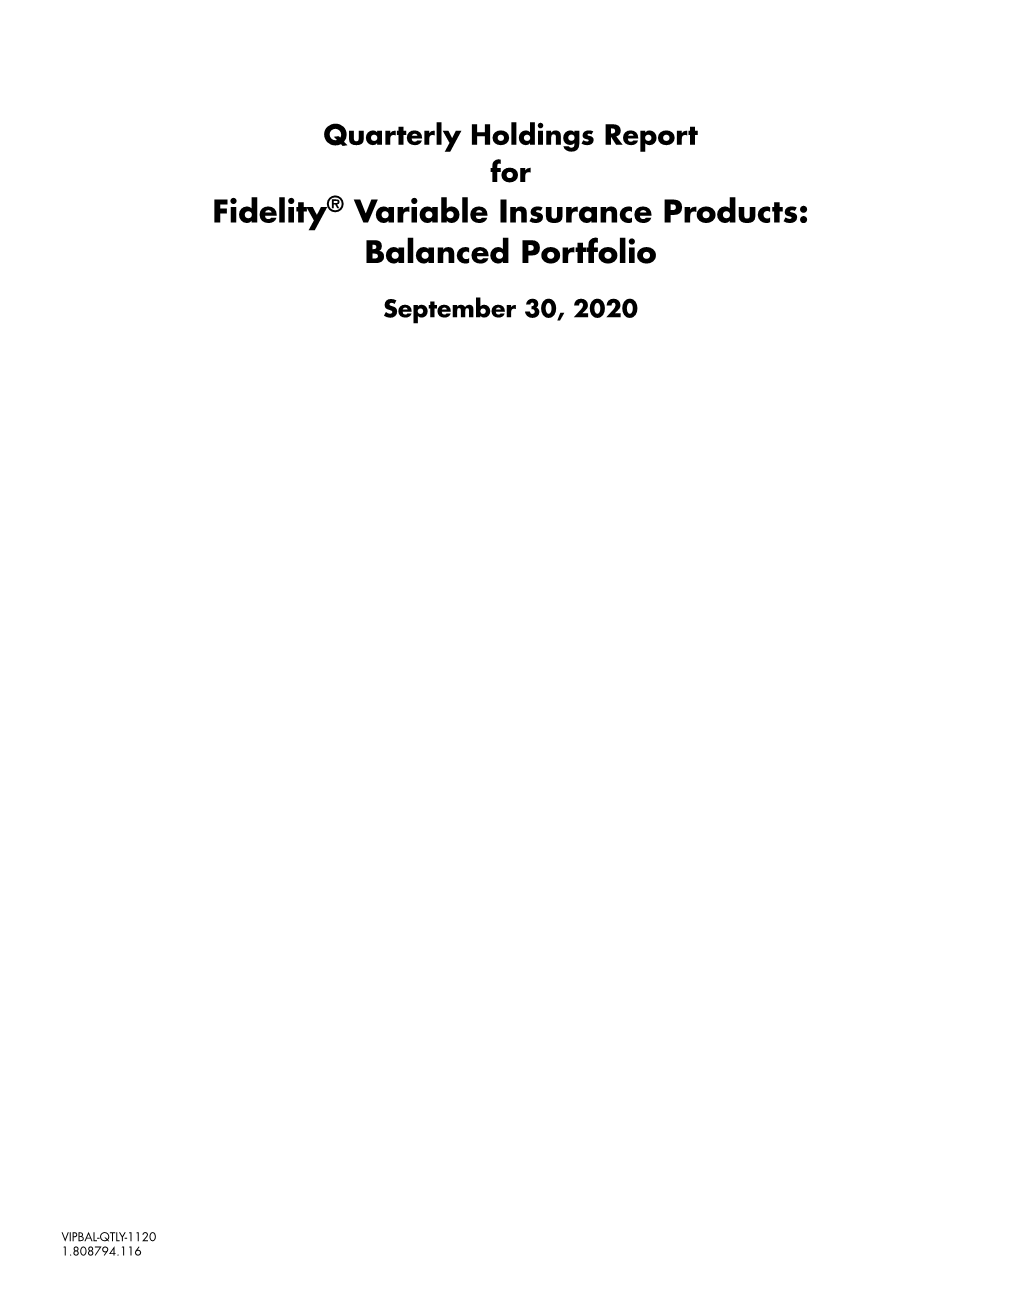 Fidelity® Variable Insurance Products: Balanced Portfolio